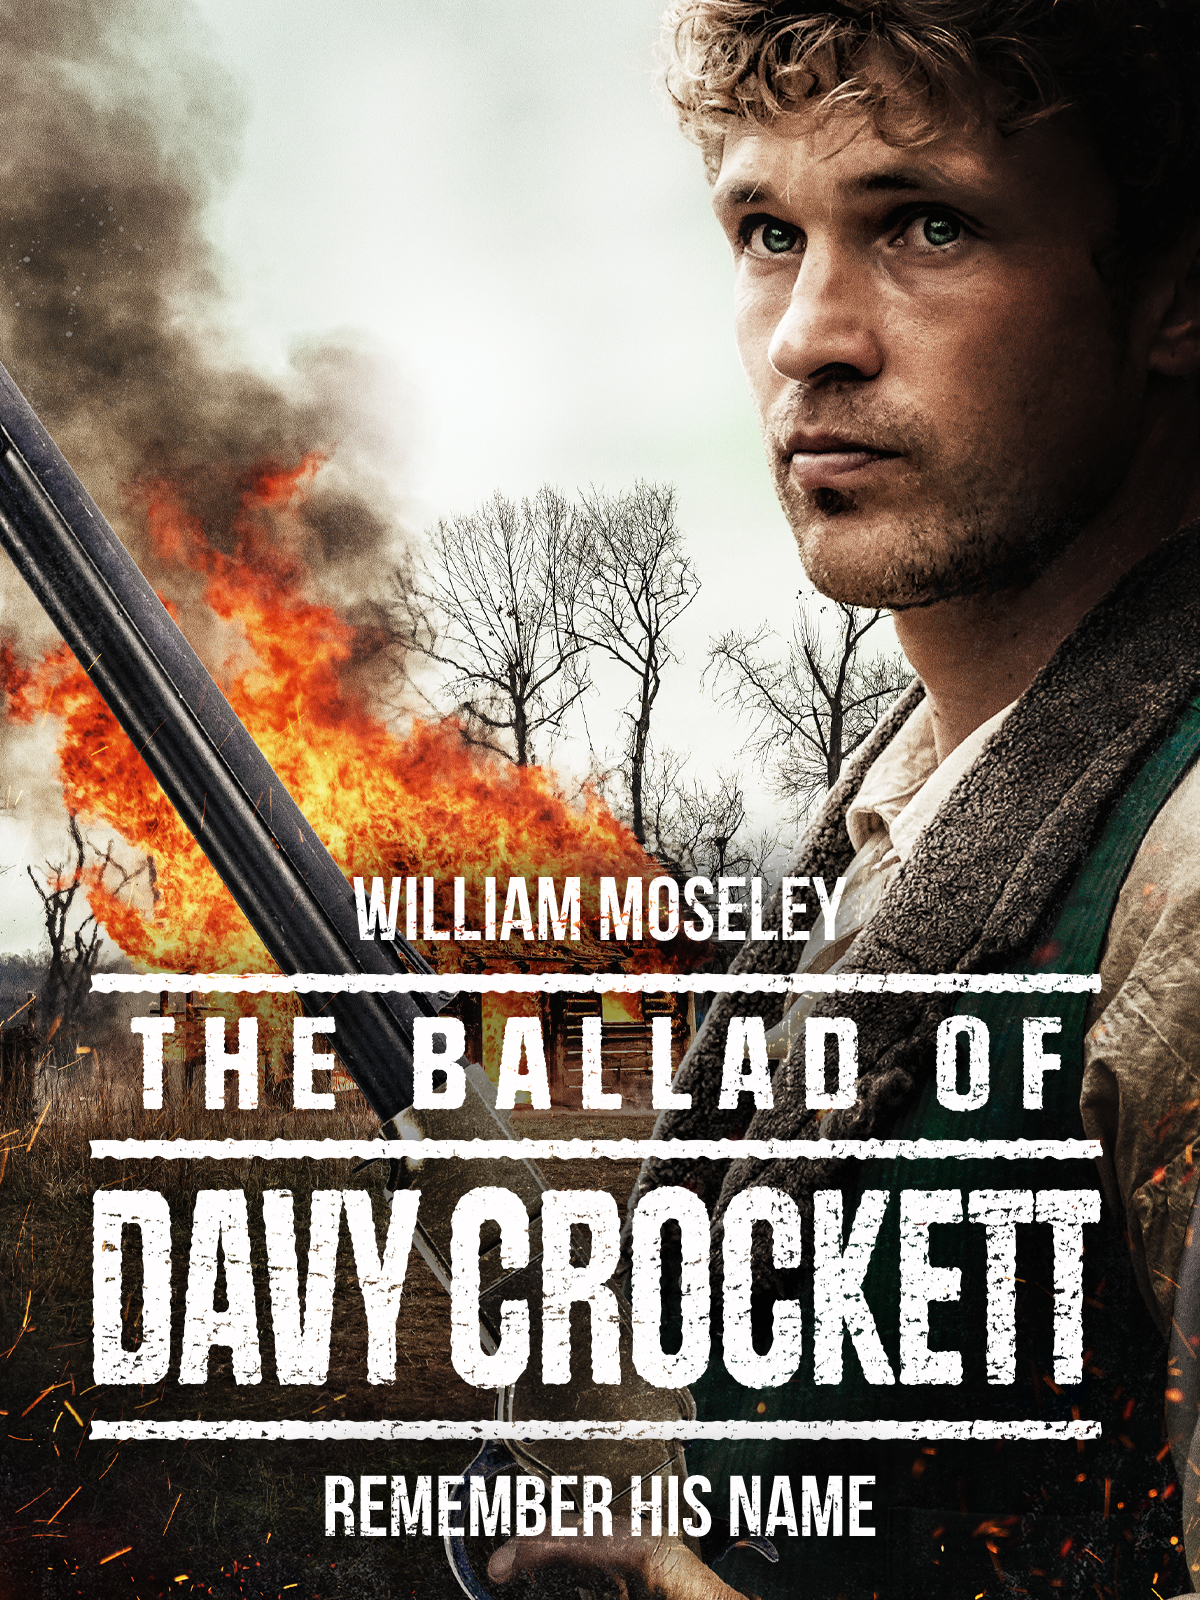 THE BALLAD OF DAVY CROCKETT Review